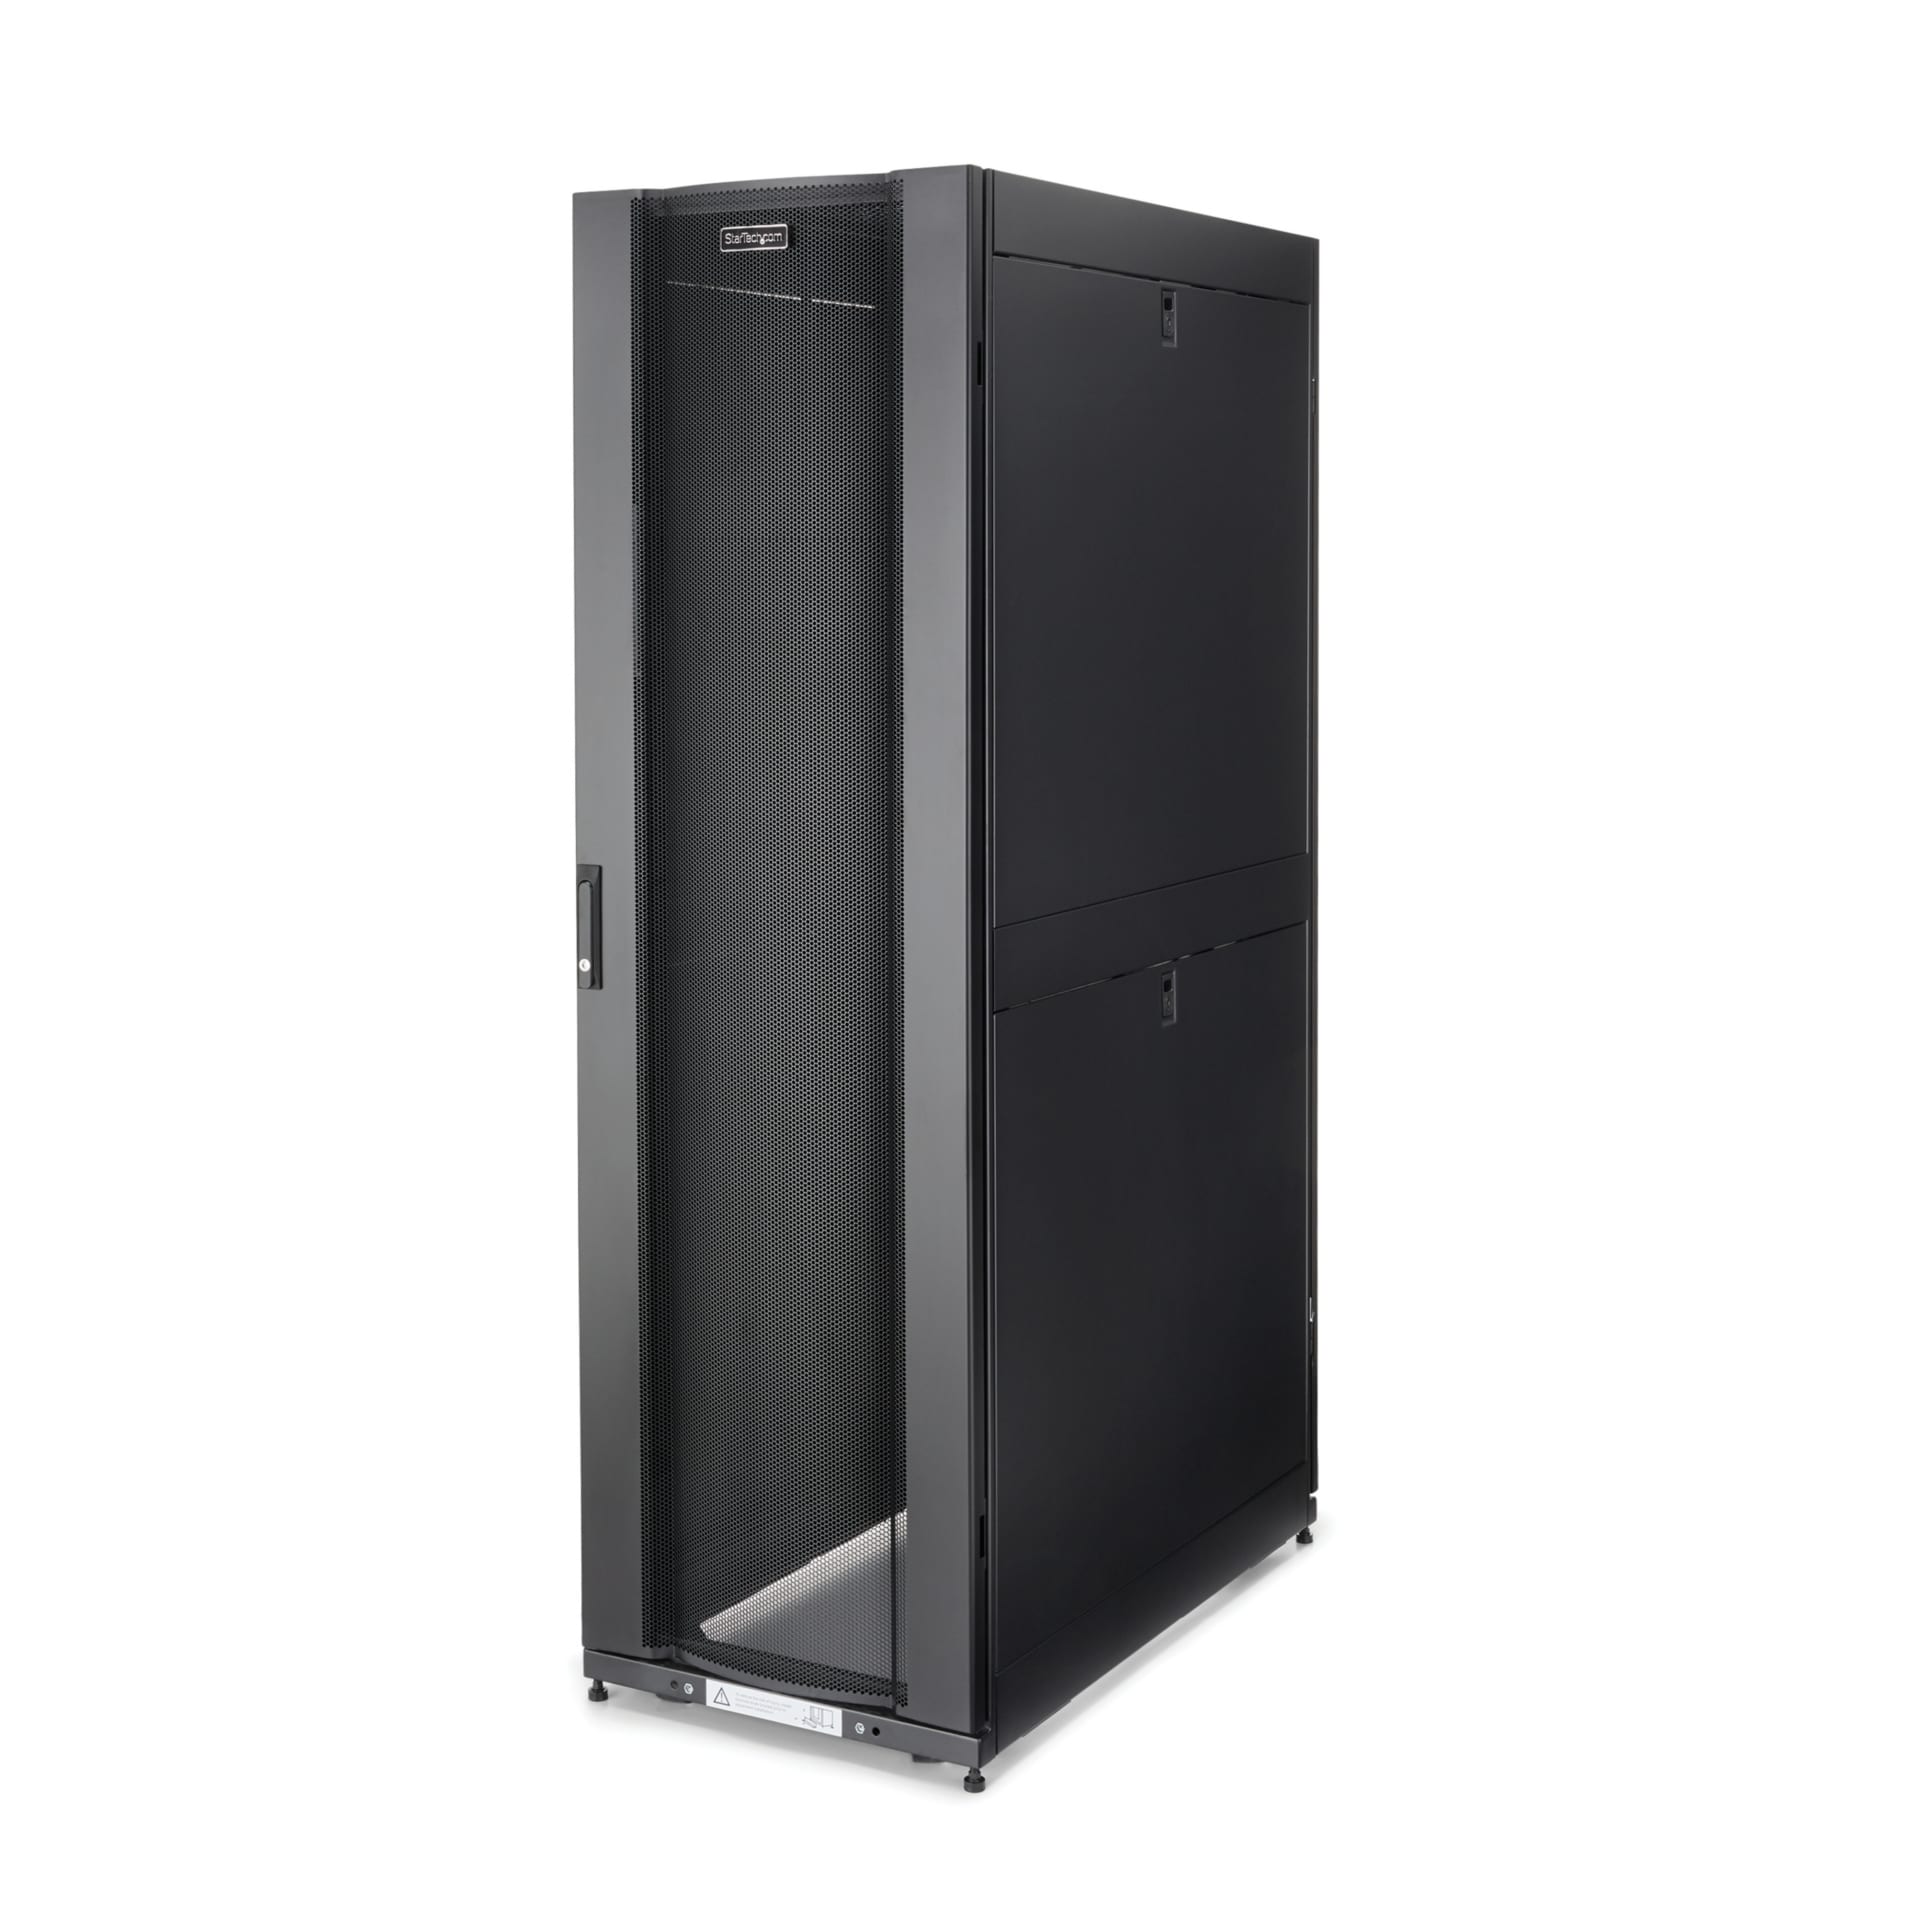 StarTech.com 4-Post 42U Server Rack Cabinet, Data Rack Cabinet for Computer/IT Equipment, Rack Server Cabinet w/ Casters